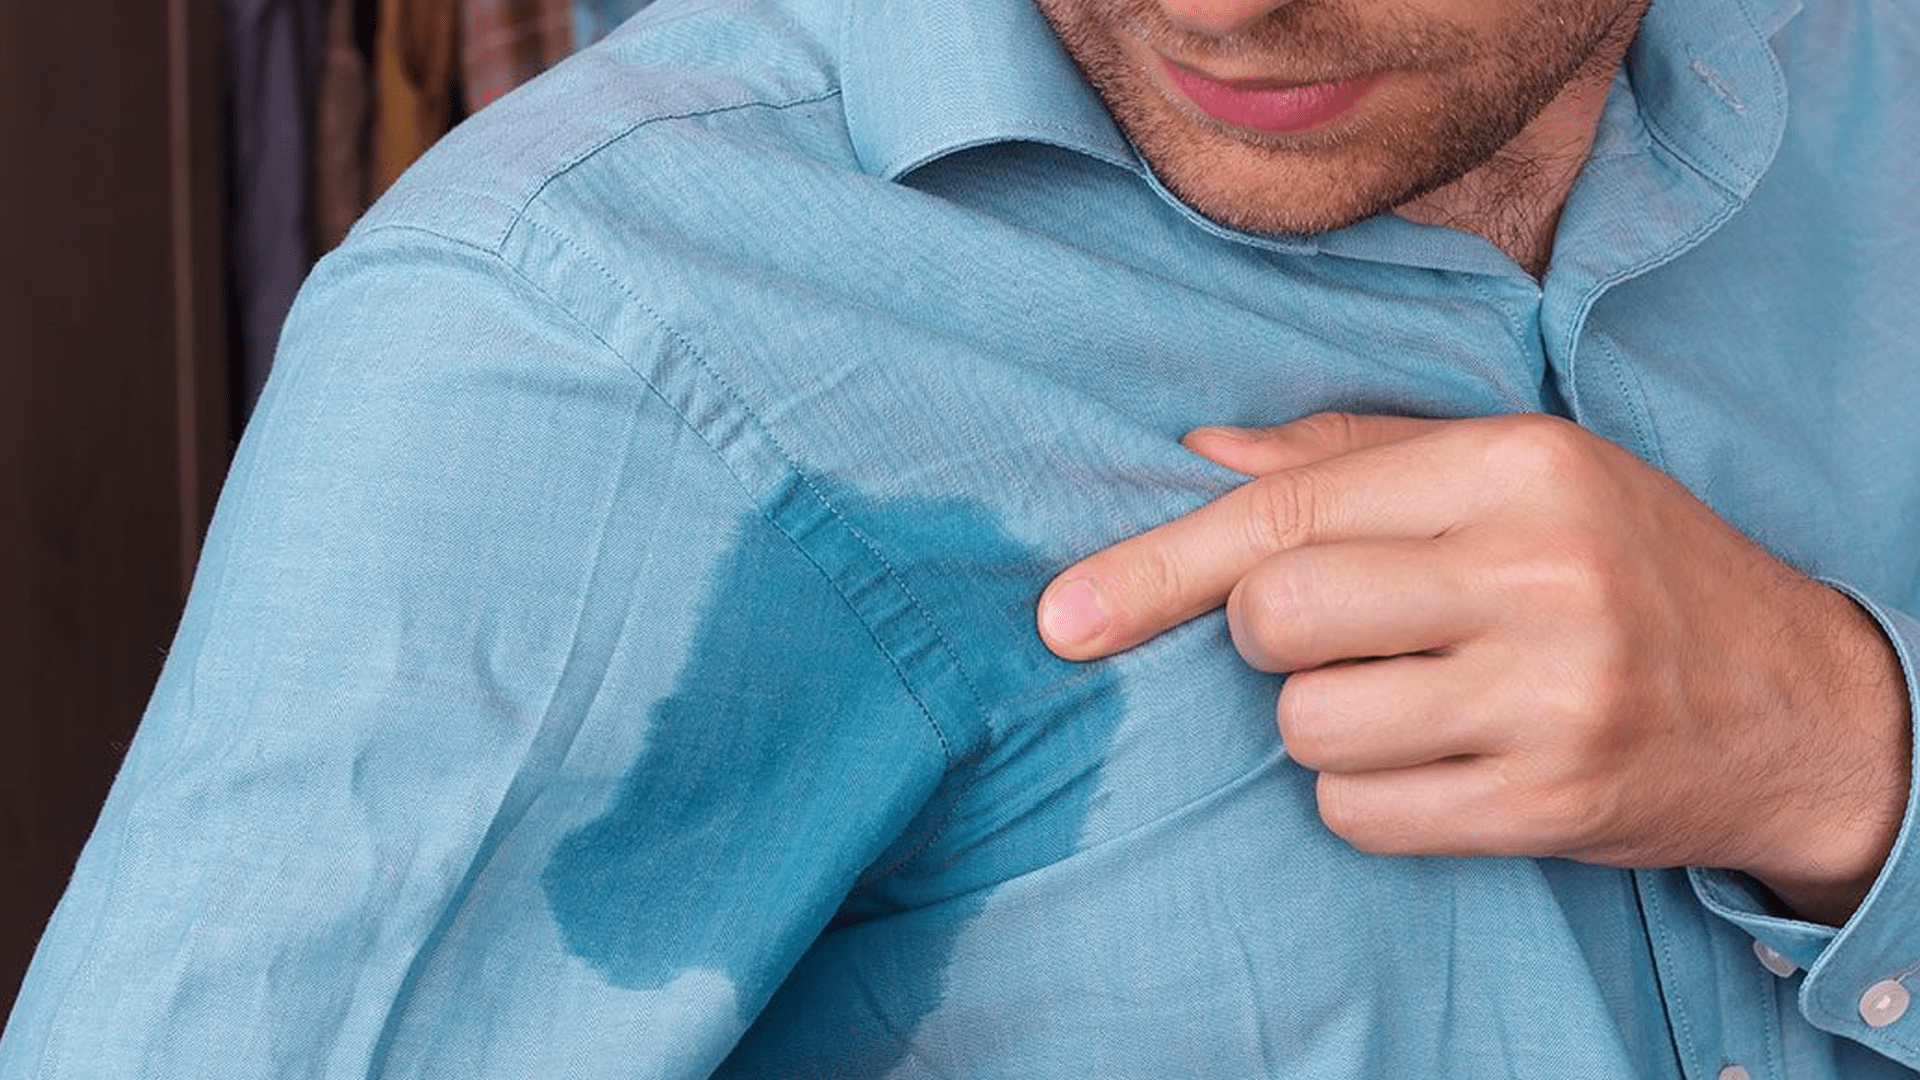 man sweaty armpit showing through blue shirt